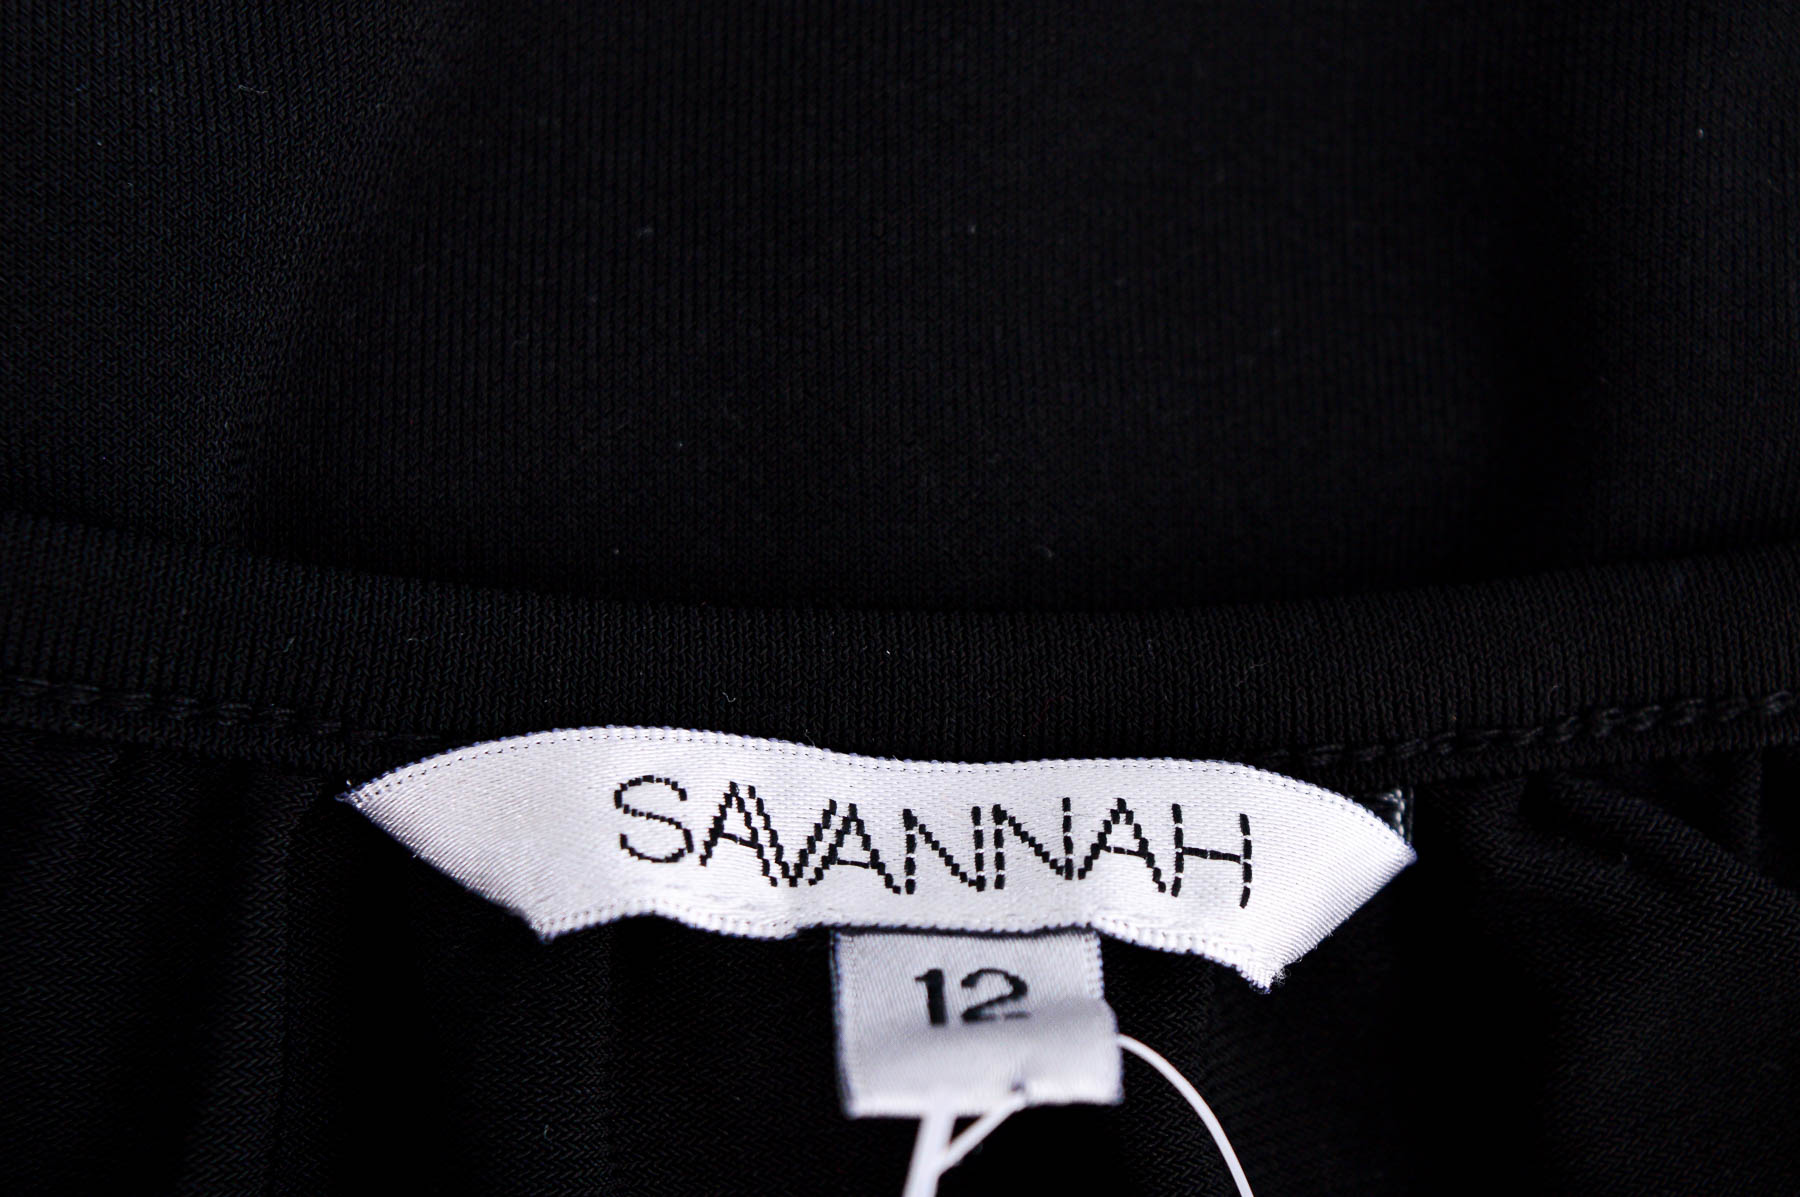 Дамска блуза - Savannah - 2